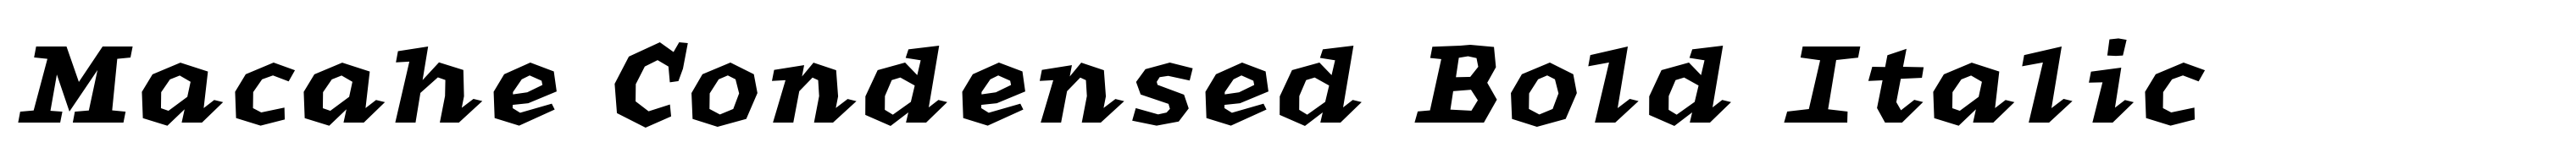 Macahe Condensed Bold Italic